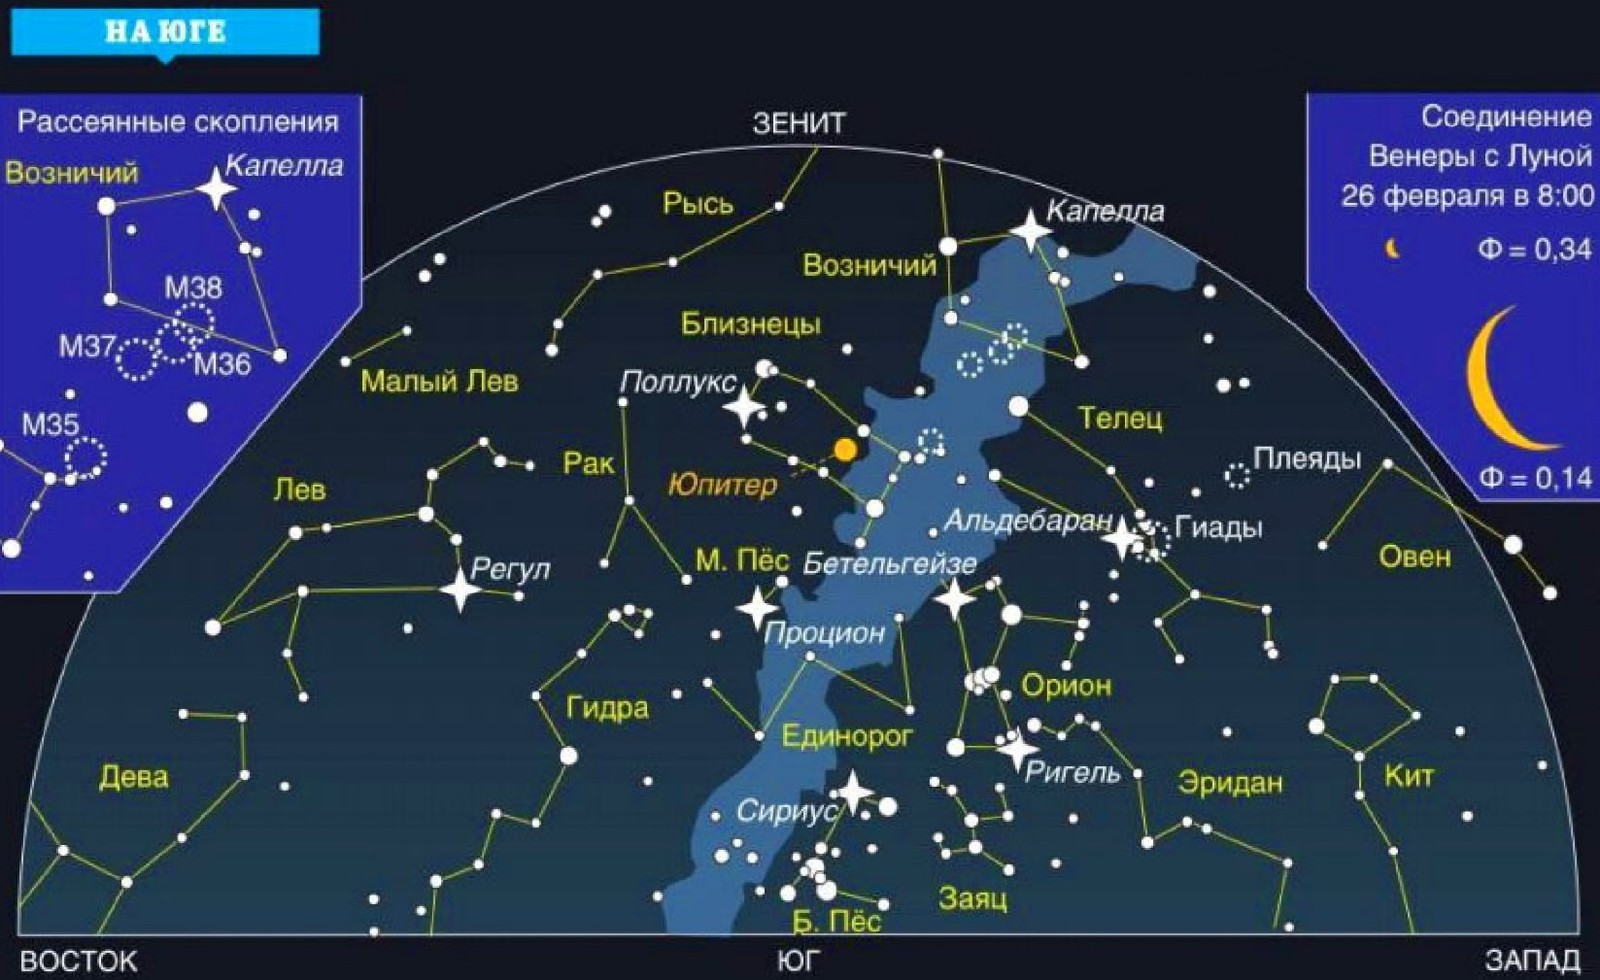 Какая звезда на юге. Летние созвездия Северного полушария. Карта звездного неба с названиями звезд. Созвездия летнего неба Северного полушария. Созвездия Северного полушария летом.